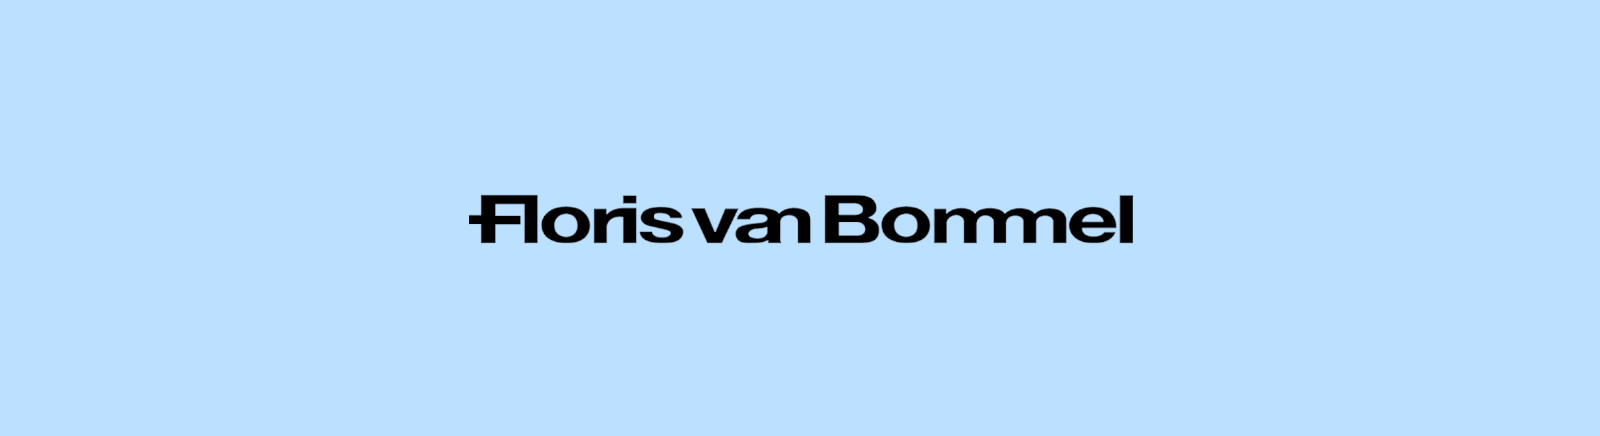 Floris van Bommel Schnürboots online bestellen im Prange Schuhe Shop